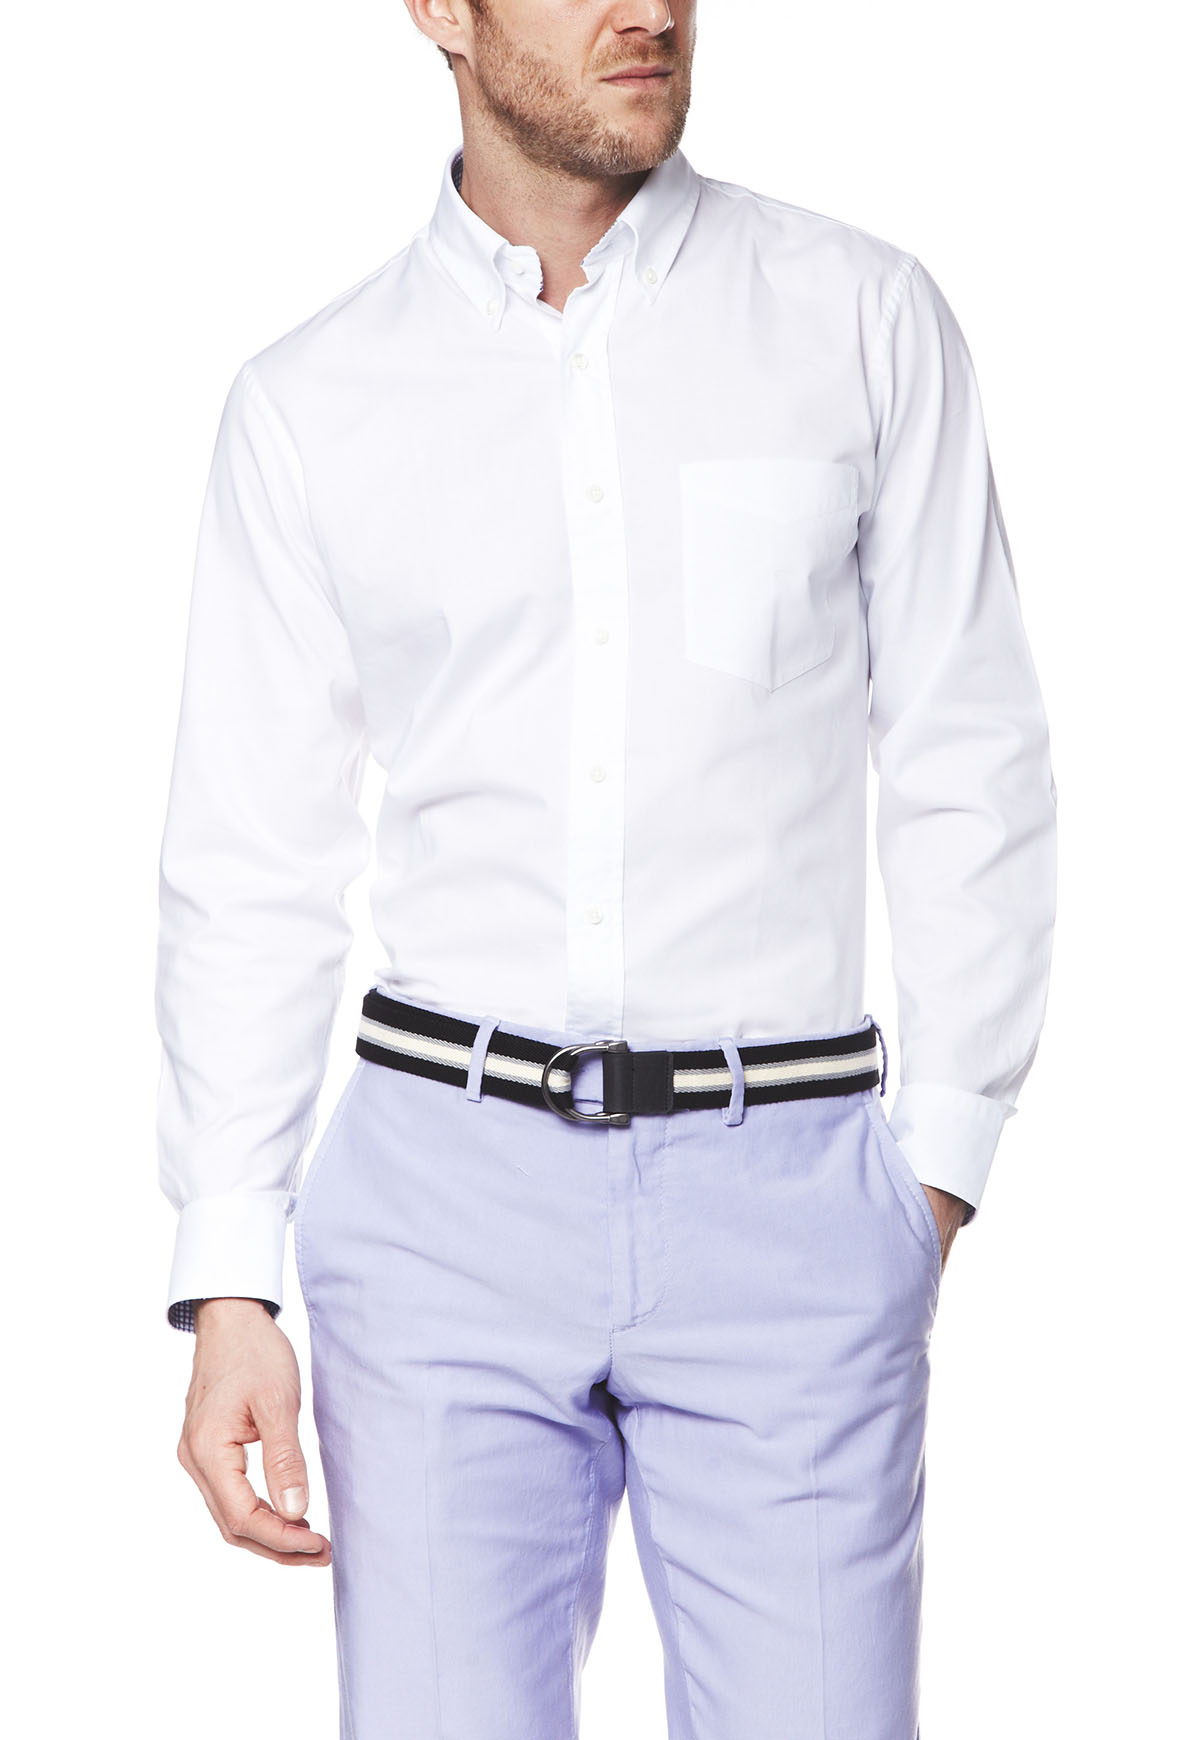 chemise-homme-manches-longues-coupe-decontractee-col-boutonne-oxford-pinpoint-blanc-clair-uni-coton-face-alain-figaret-an0605806801.jpg